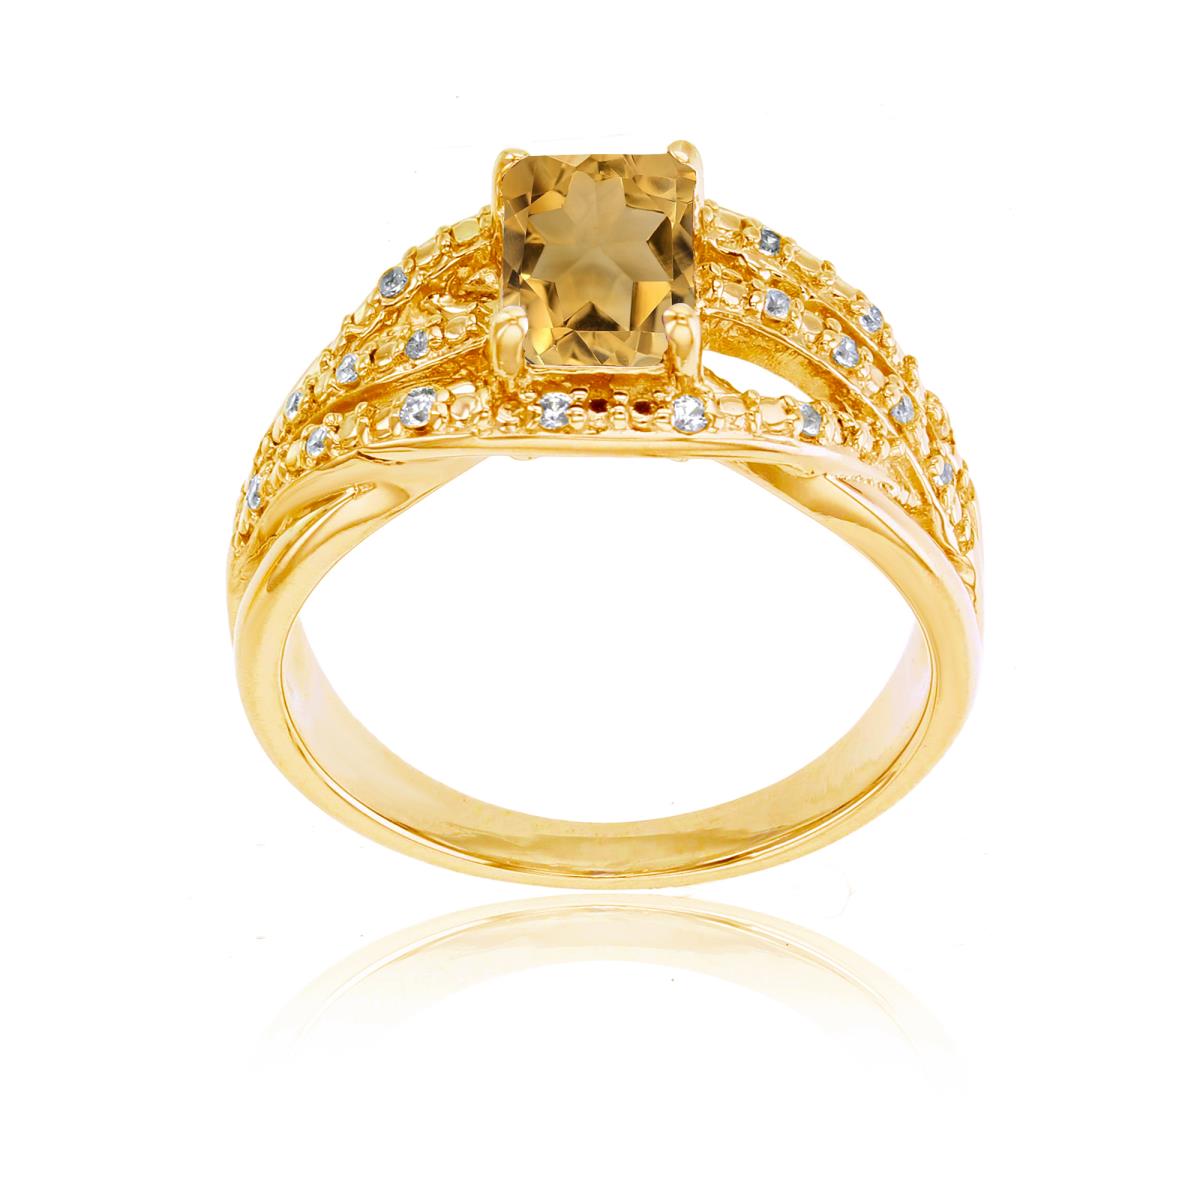 14K Yellow Gold 0.10 CTTW Rnd Diamond & 7x5mm Oct Citrine Ring